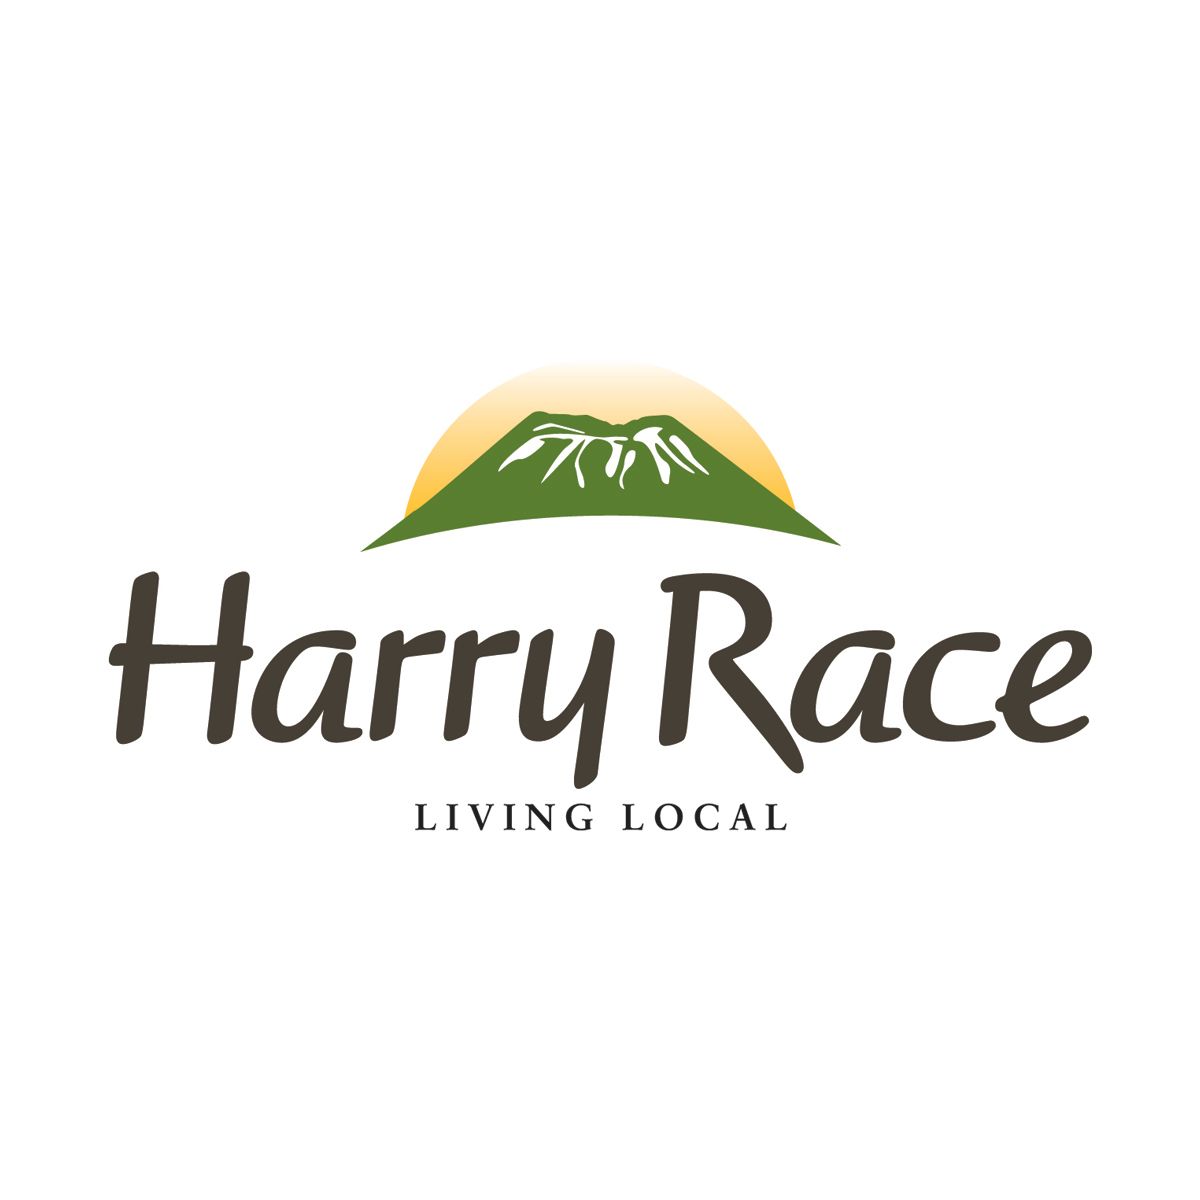 Harry race logo.jpg